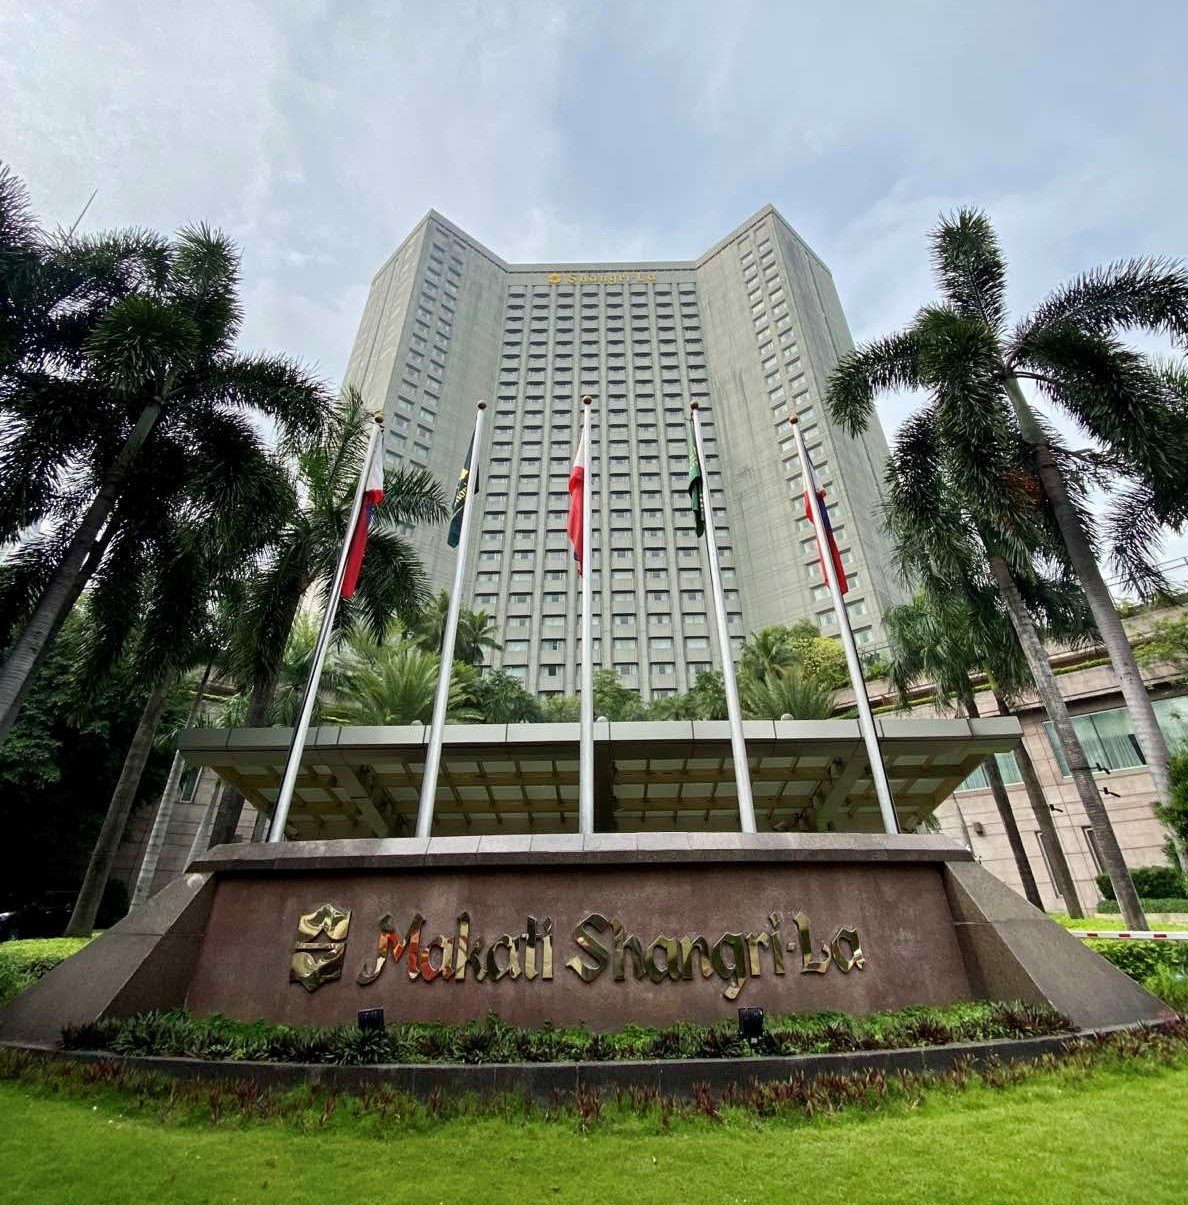 Remembering Makati Shangri-La: 4 things to know